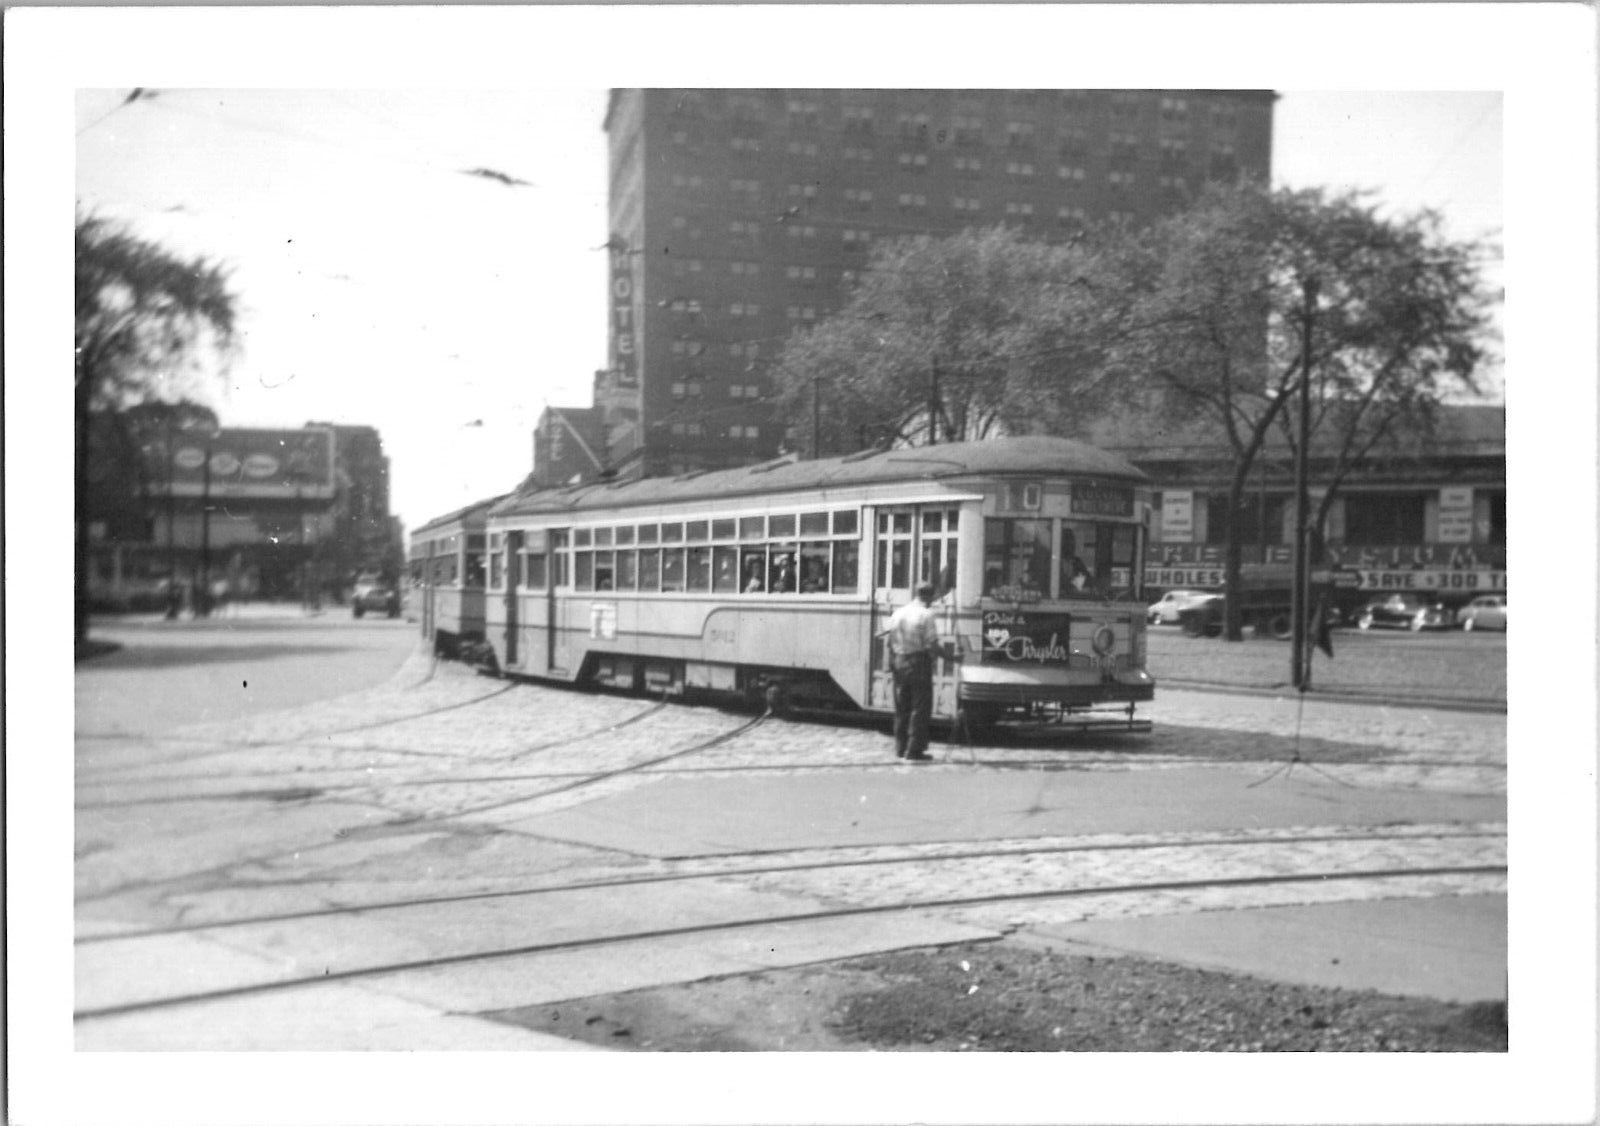 CTS Cleveland Railway Kuhlman Streetcar Trolley Chrysler Ad 1950s Vintage Photo